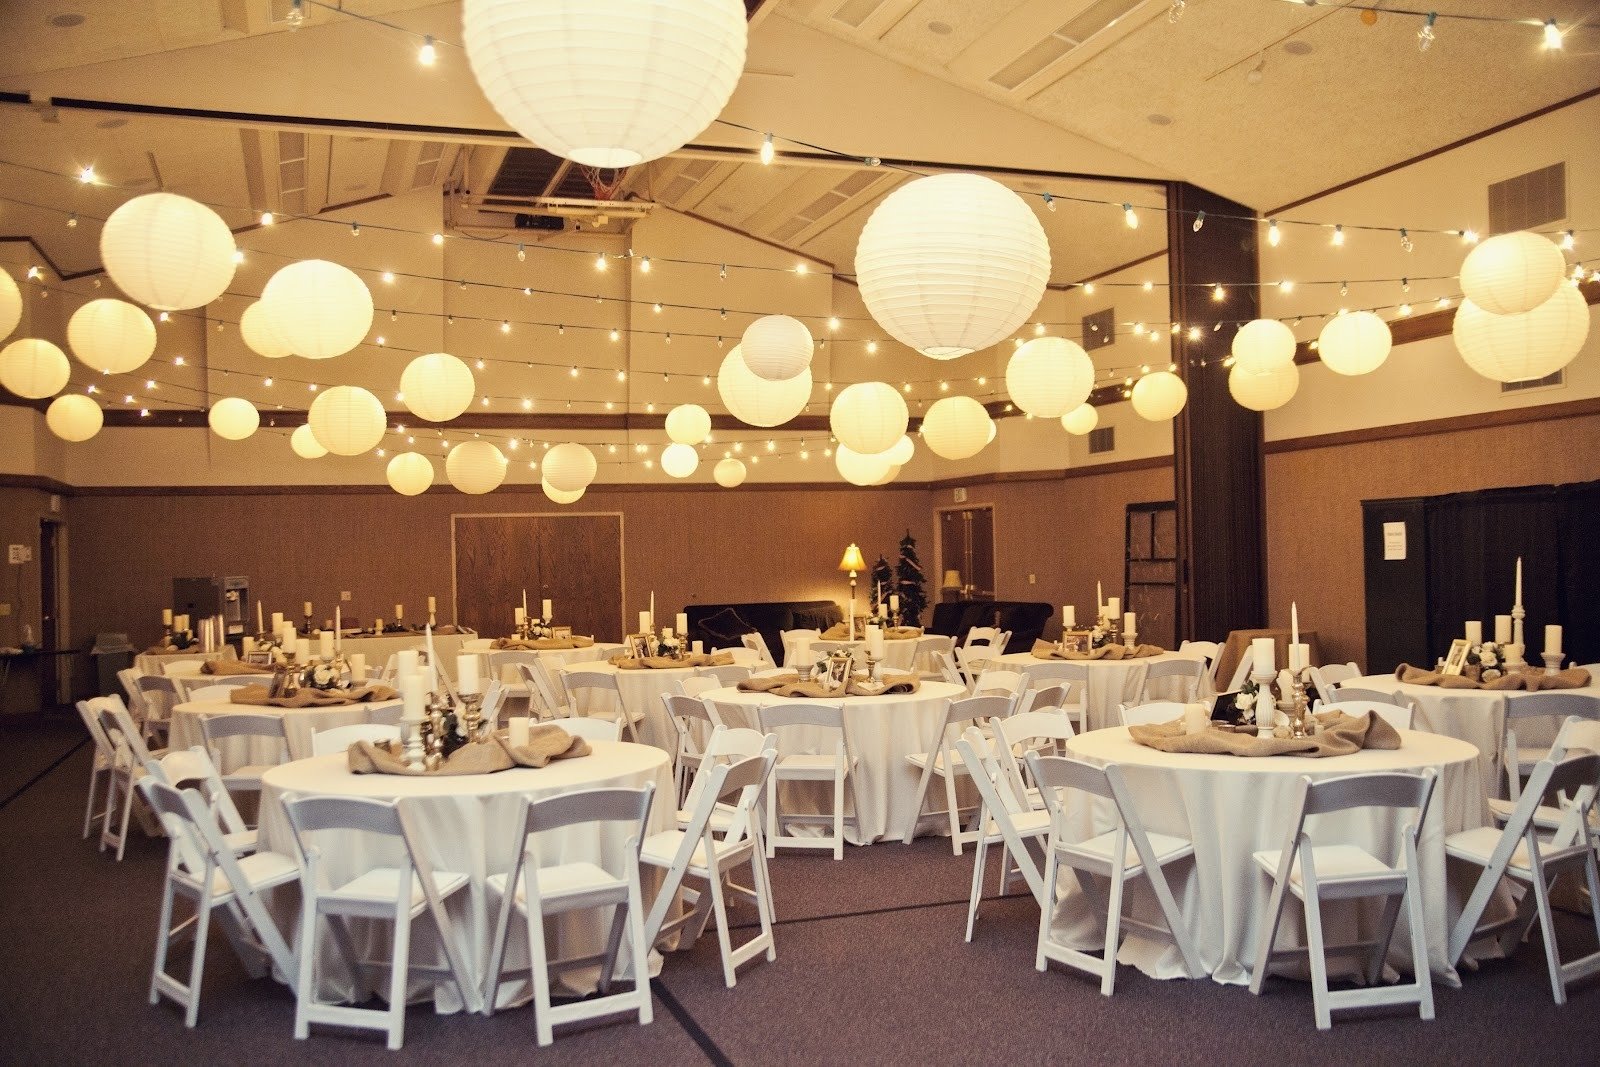 10 Spectacular Ideas For A Wedding Reception wedding venue decorations pictures best of wedding ideas wedding 2022